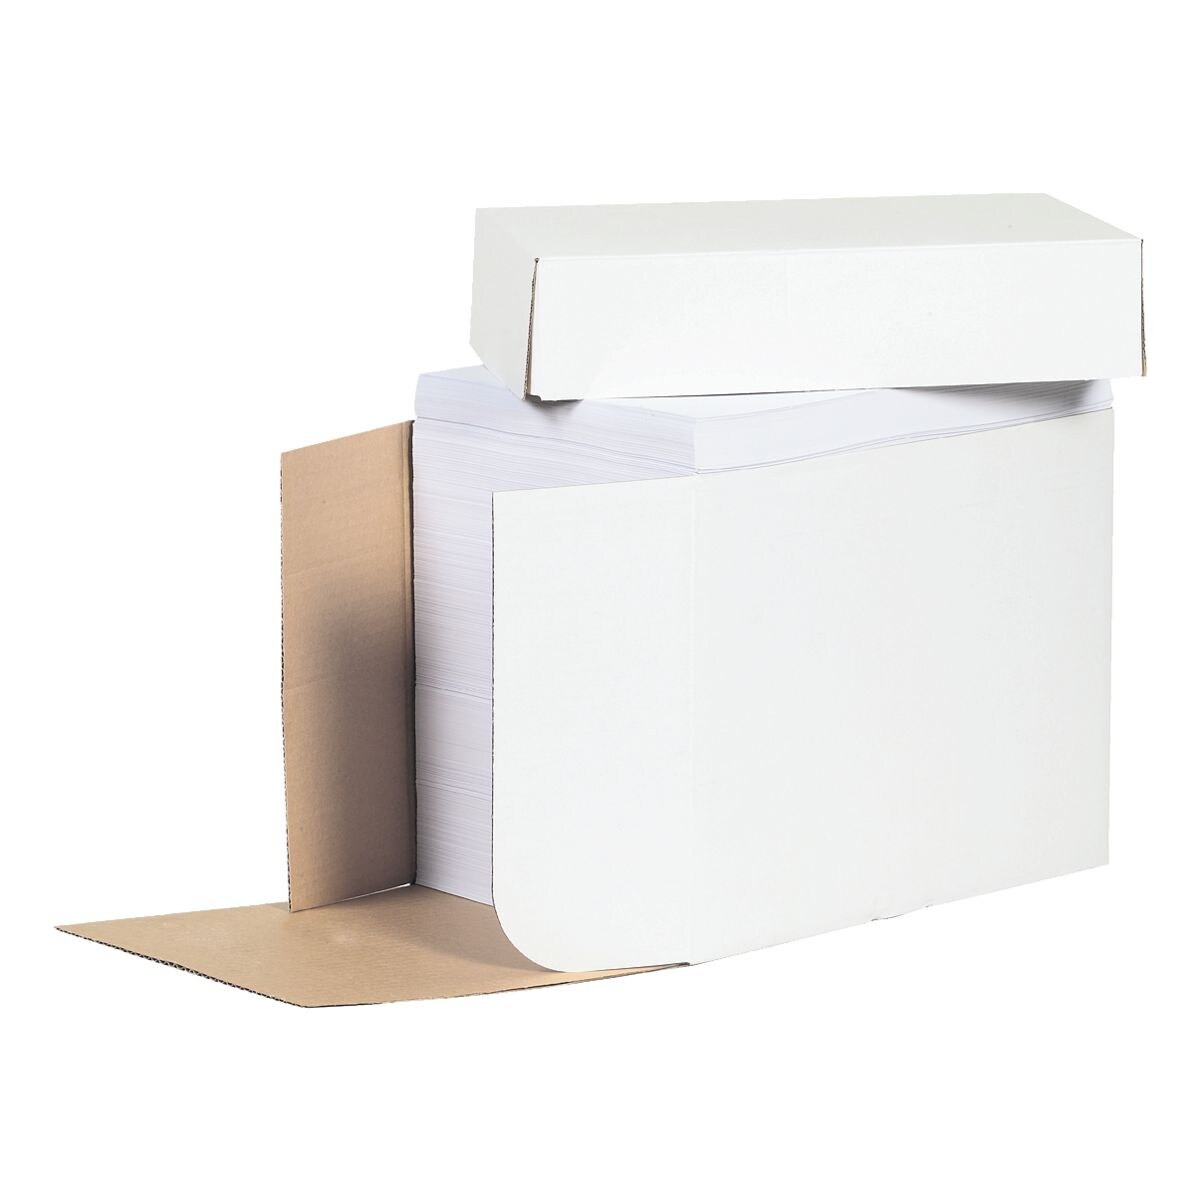 Öko-Box Recycling-Kopierpapier A4 Clairefontaine Everycopy Premium - 2500 Blatt gesamt